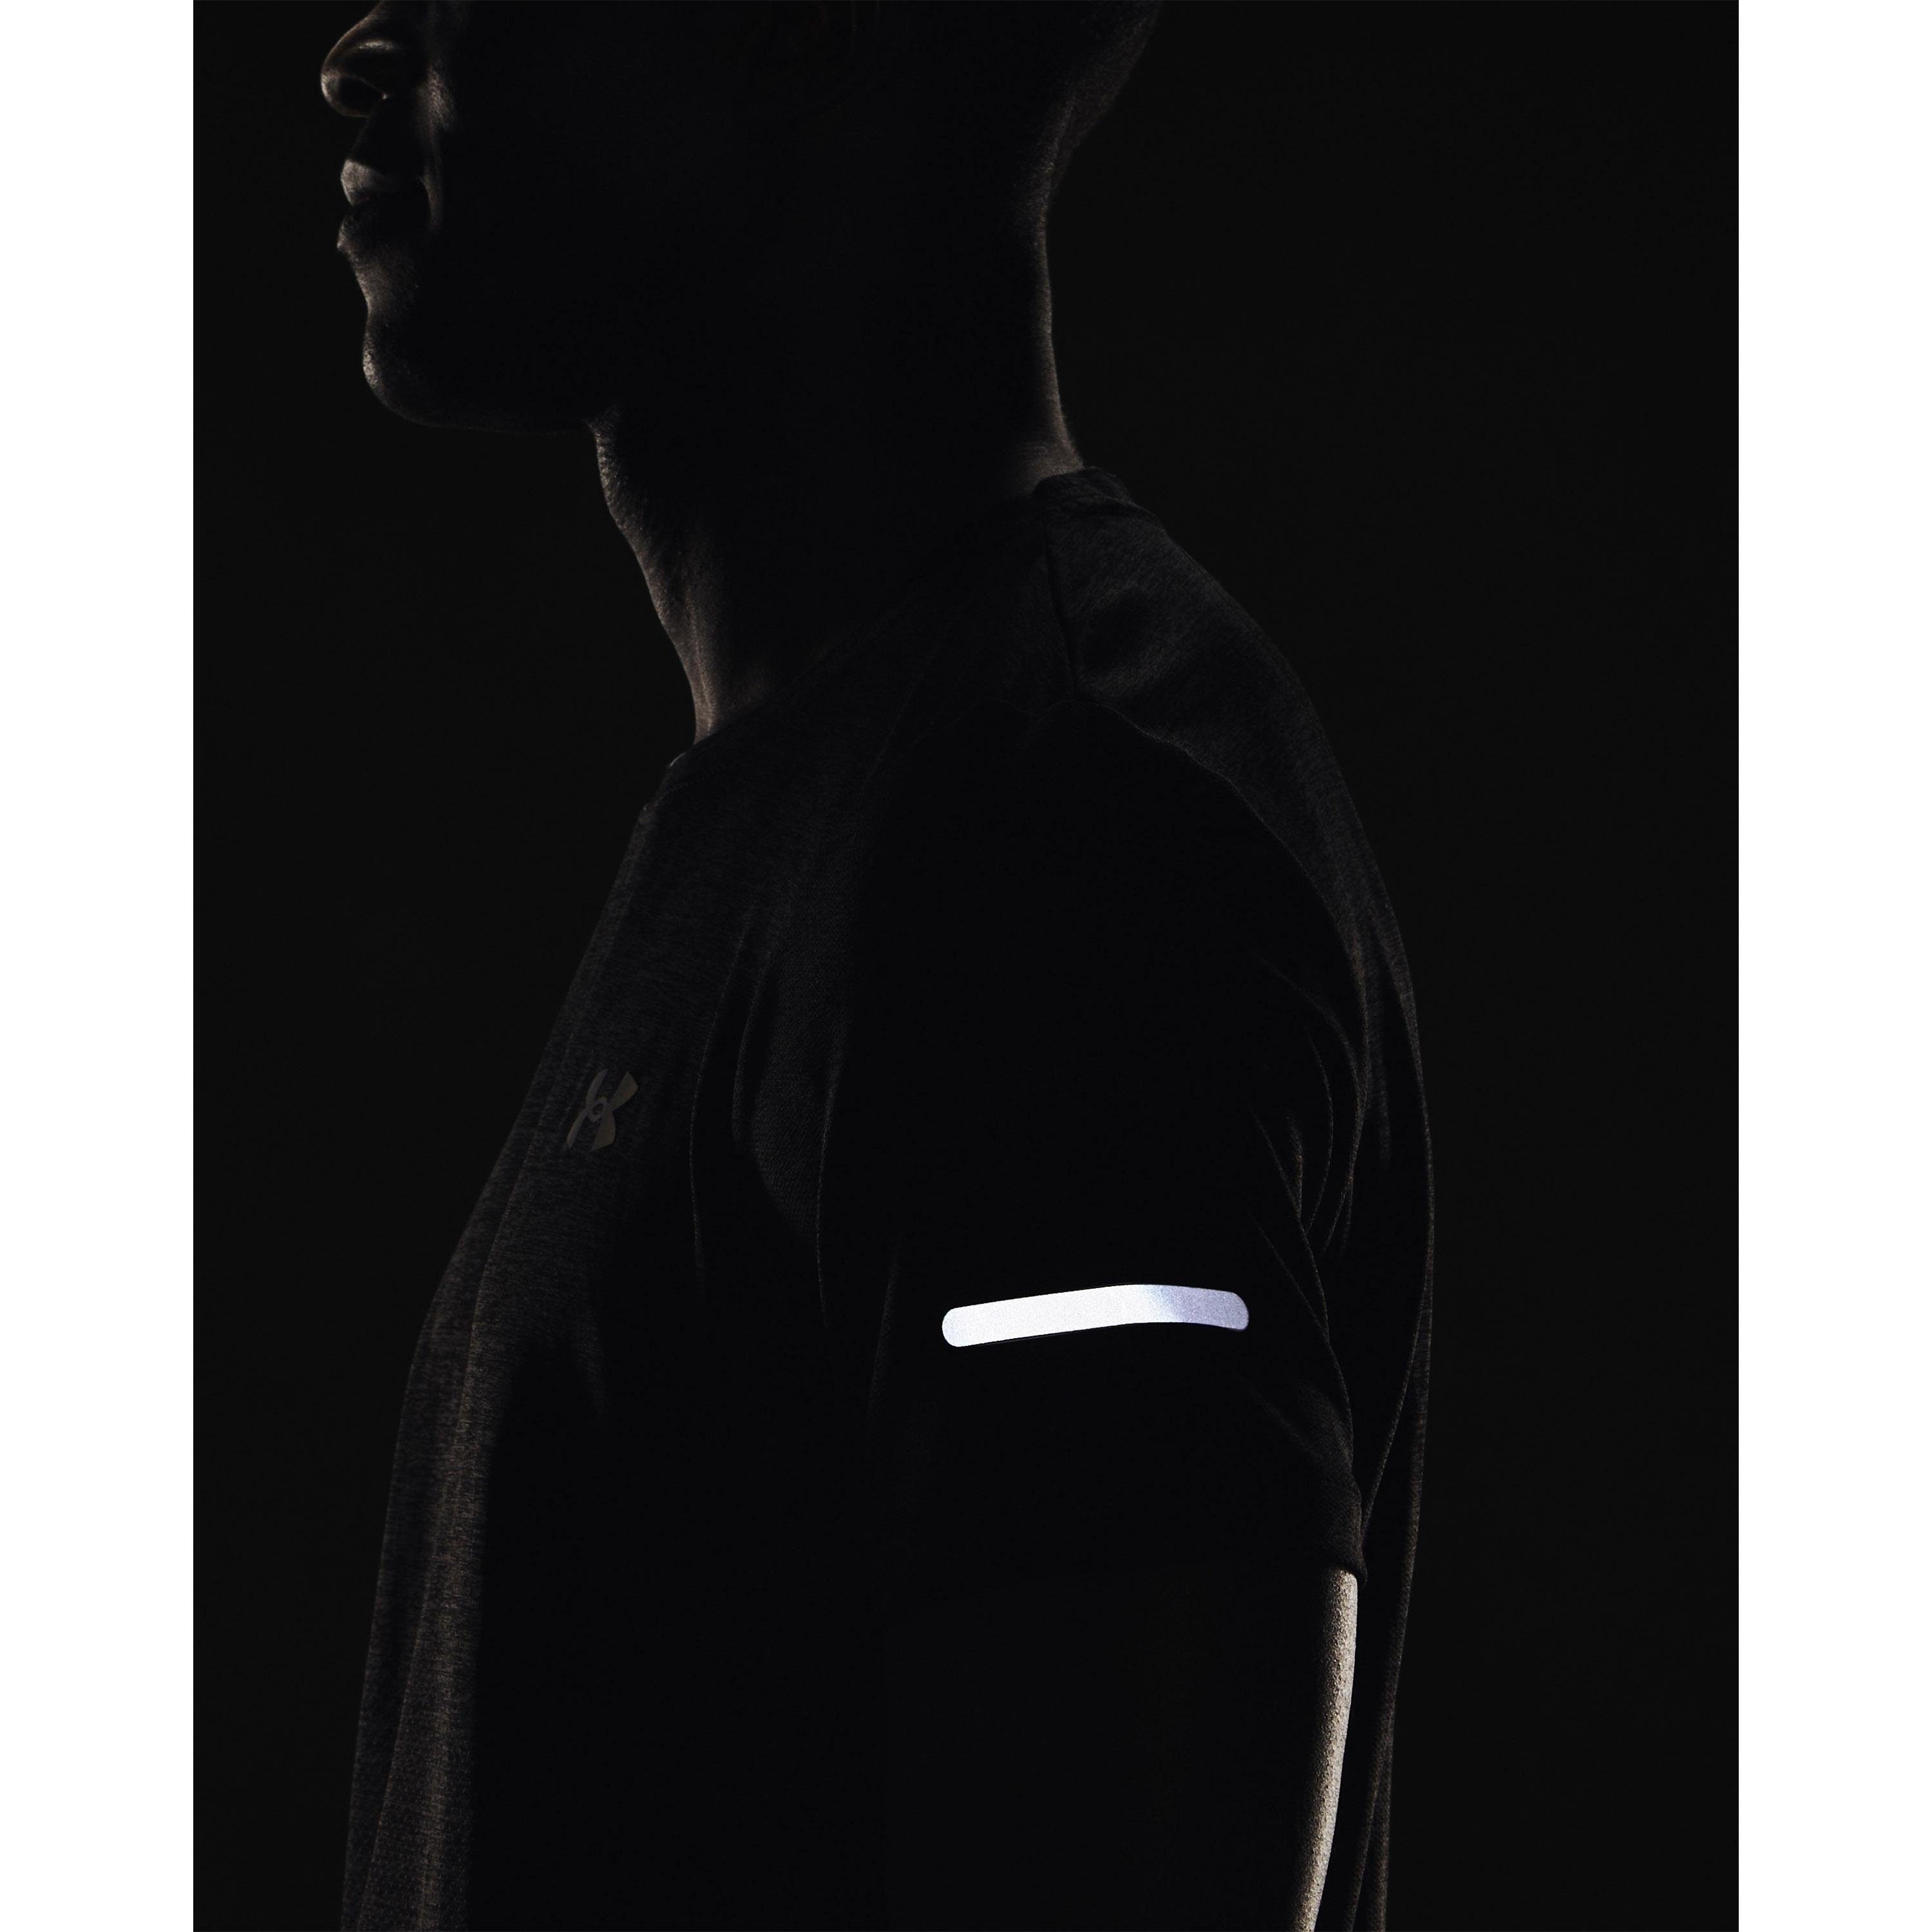 Funktionsshirt black-reflective SEAMLESS Armour® Under